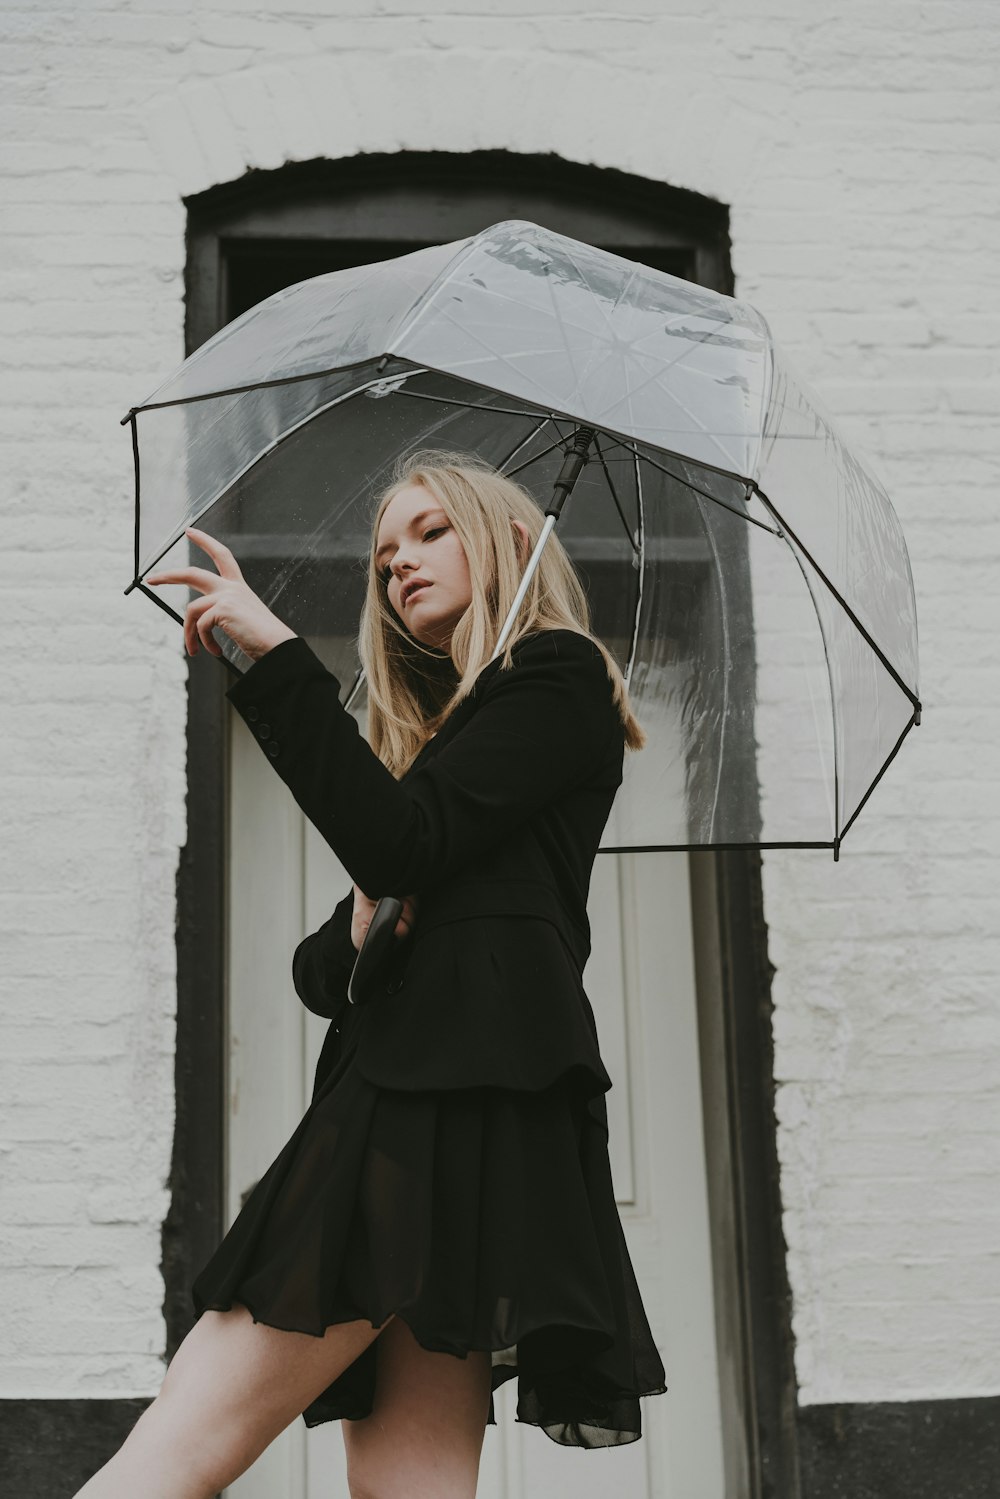 a woman in a black dress holding an umbrella